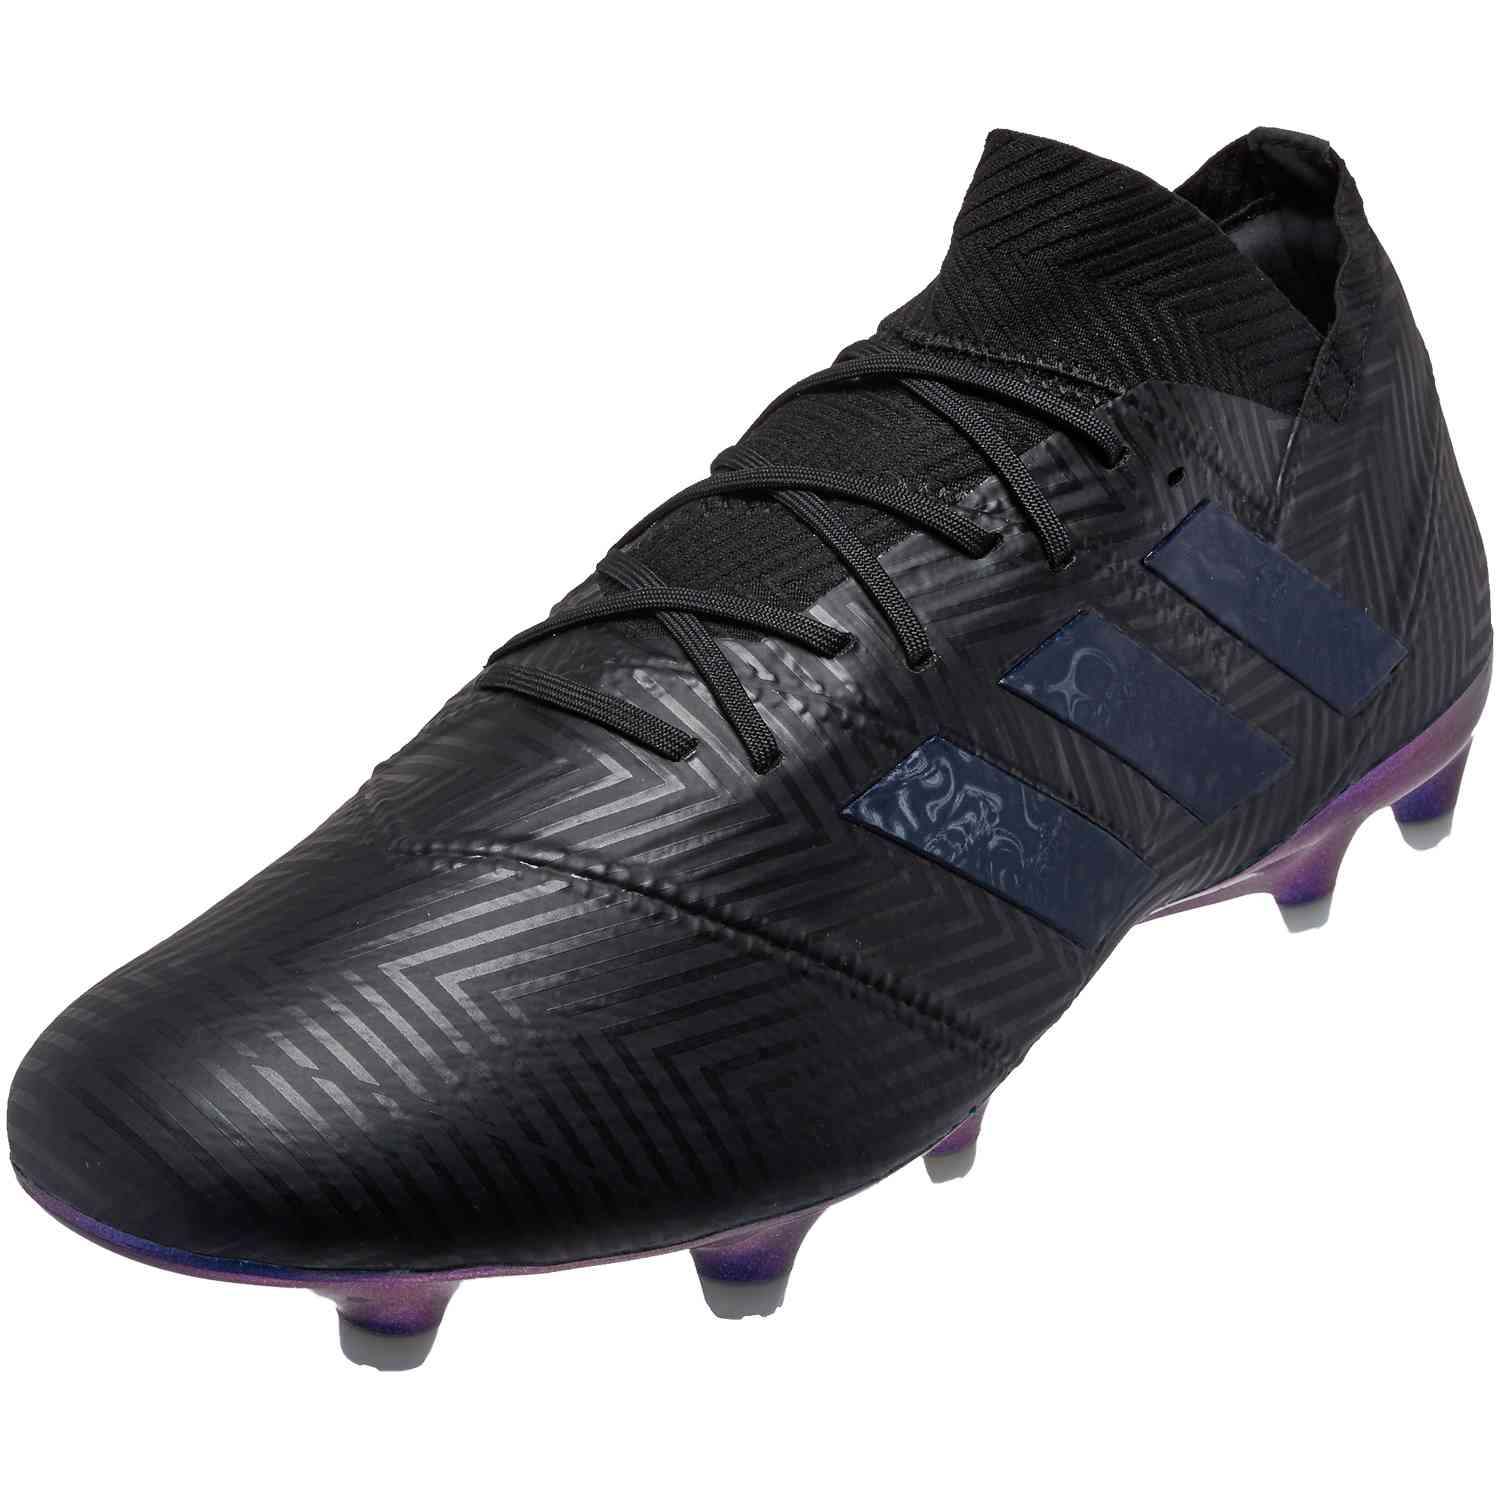 adidas men's nemeziz 18.1 fg soccer cleats